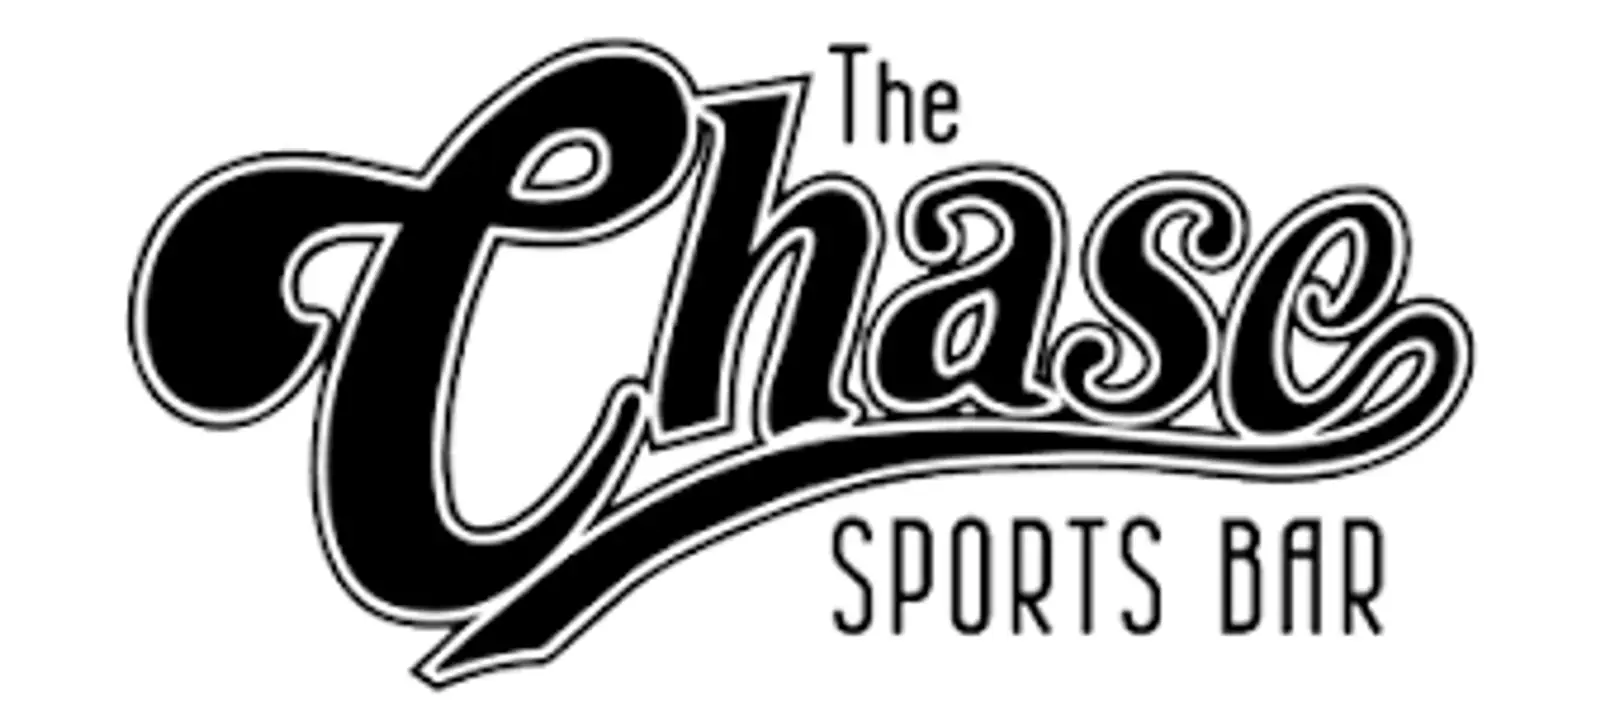 The Chase Sports Bar logo